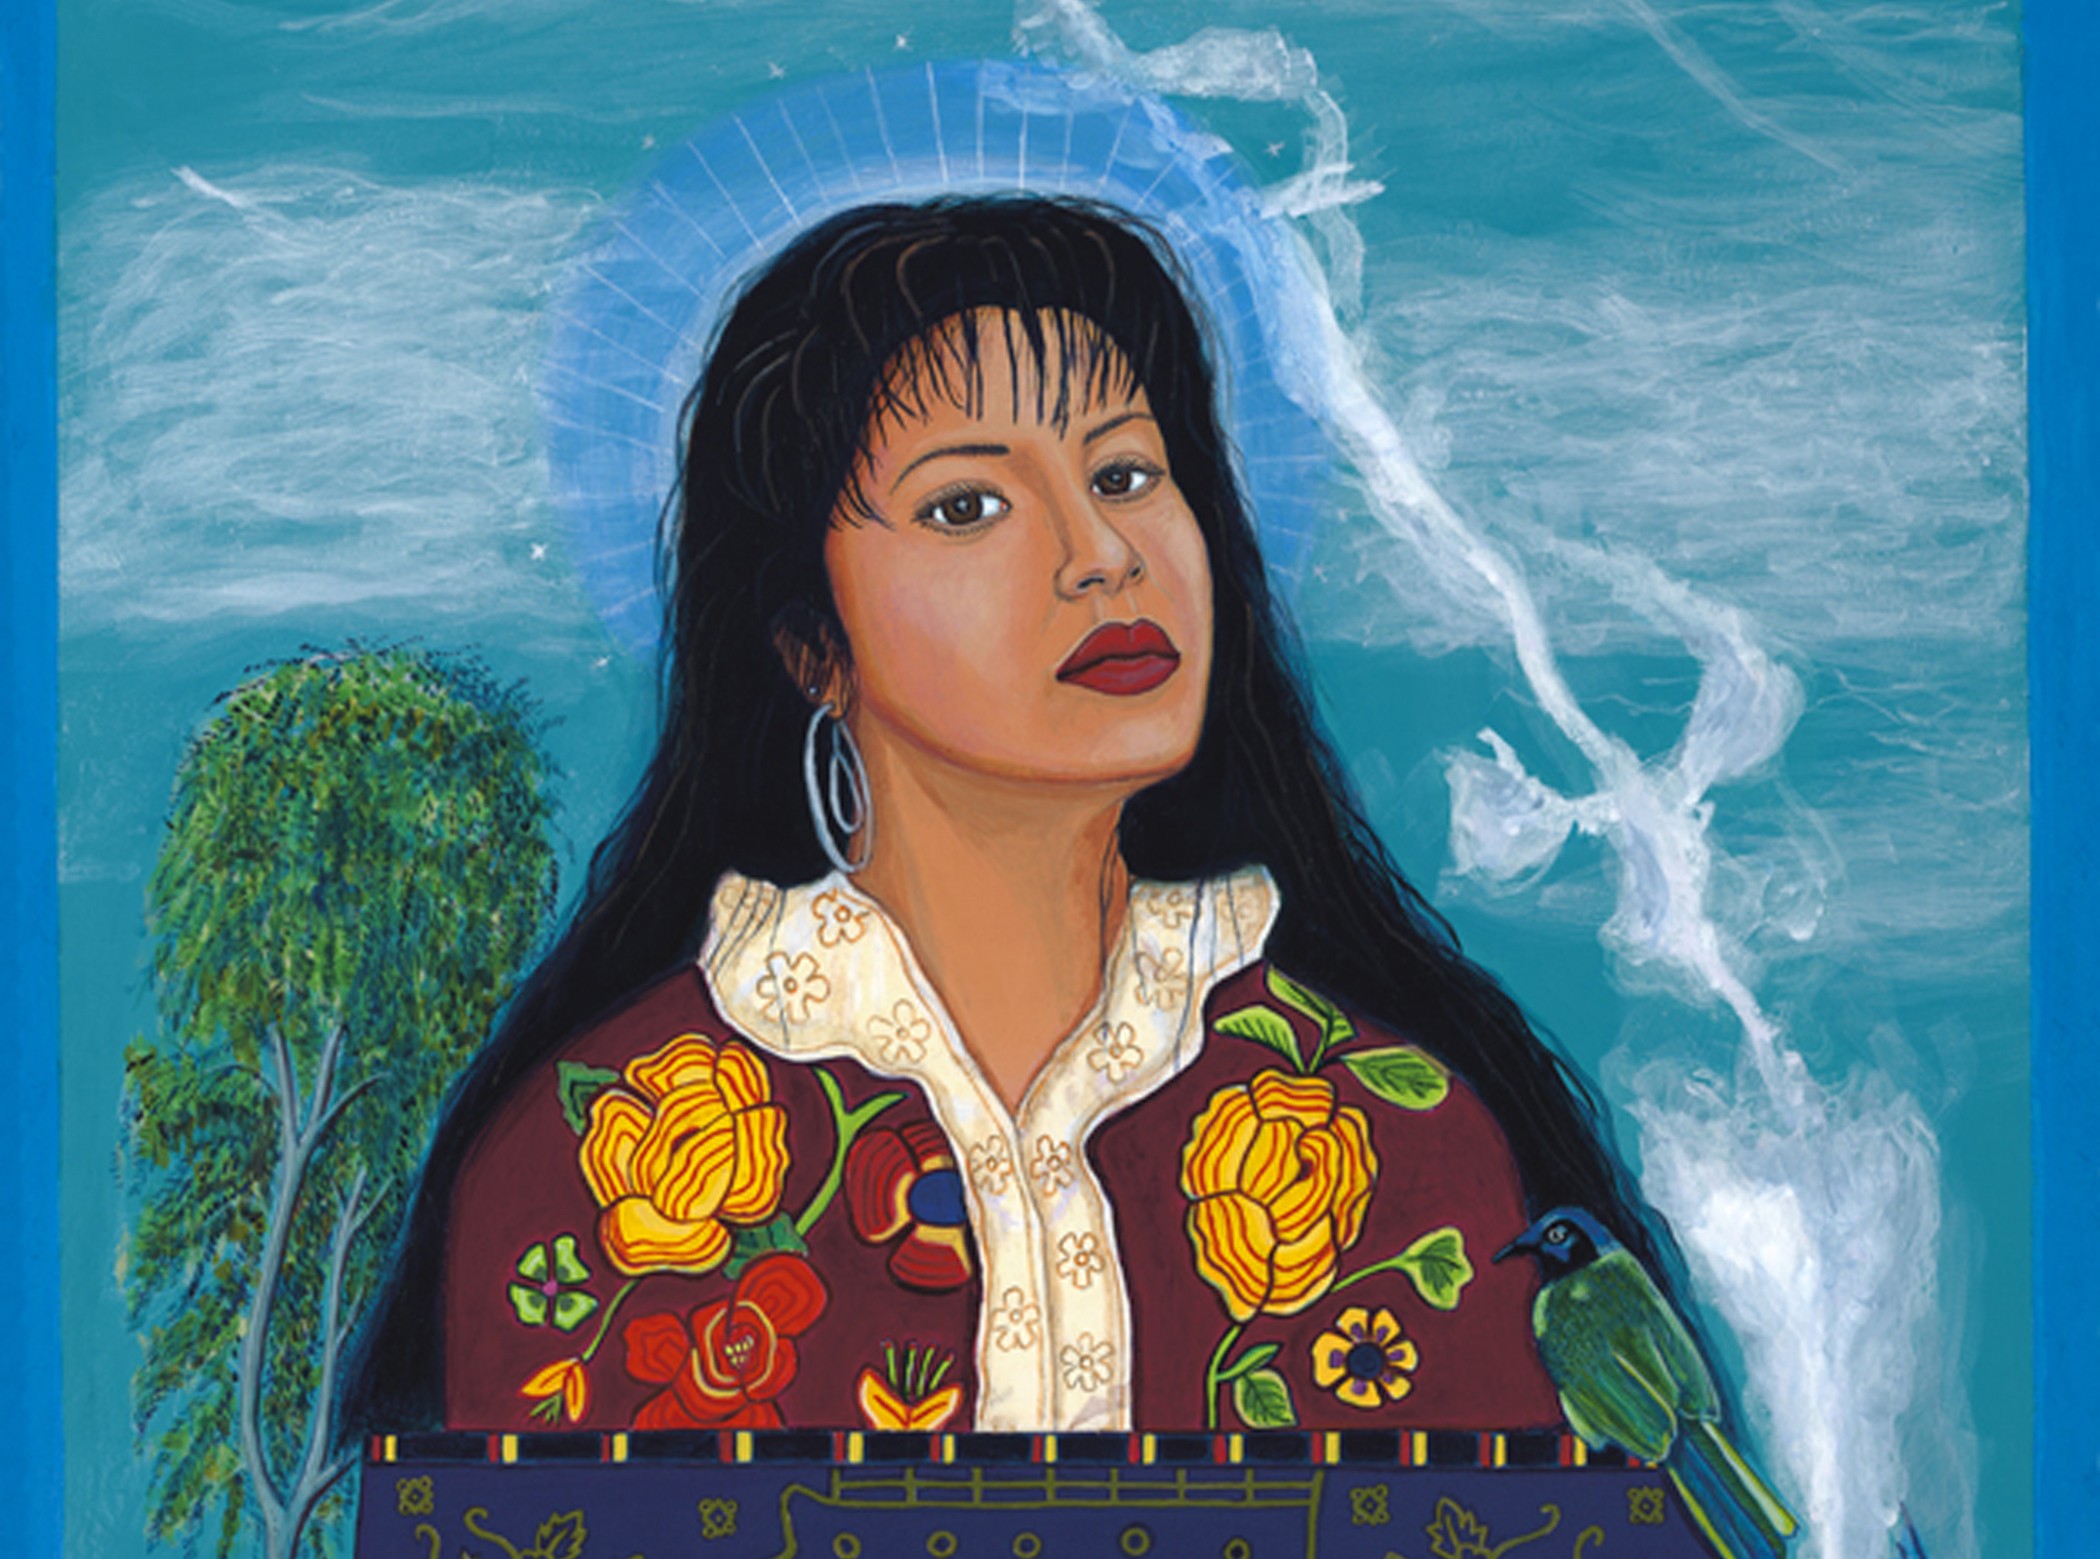 Slain Tejano singer Selena is featured in “La Frontera” exhibit. - COURTESY